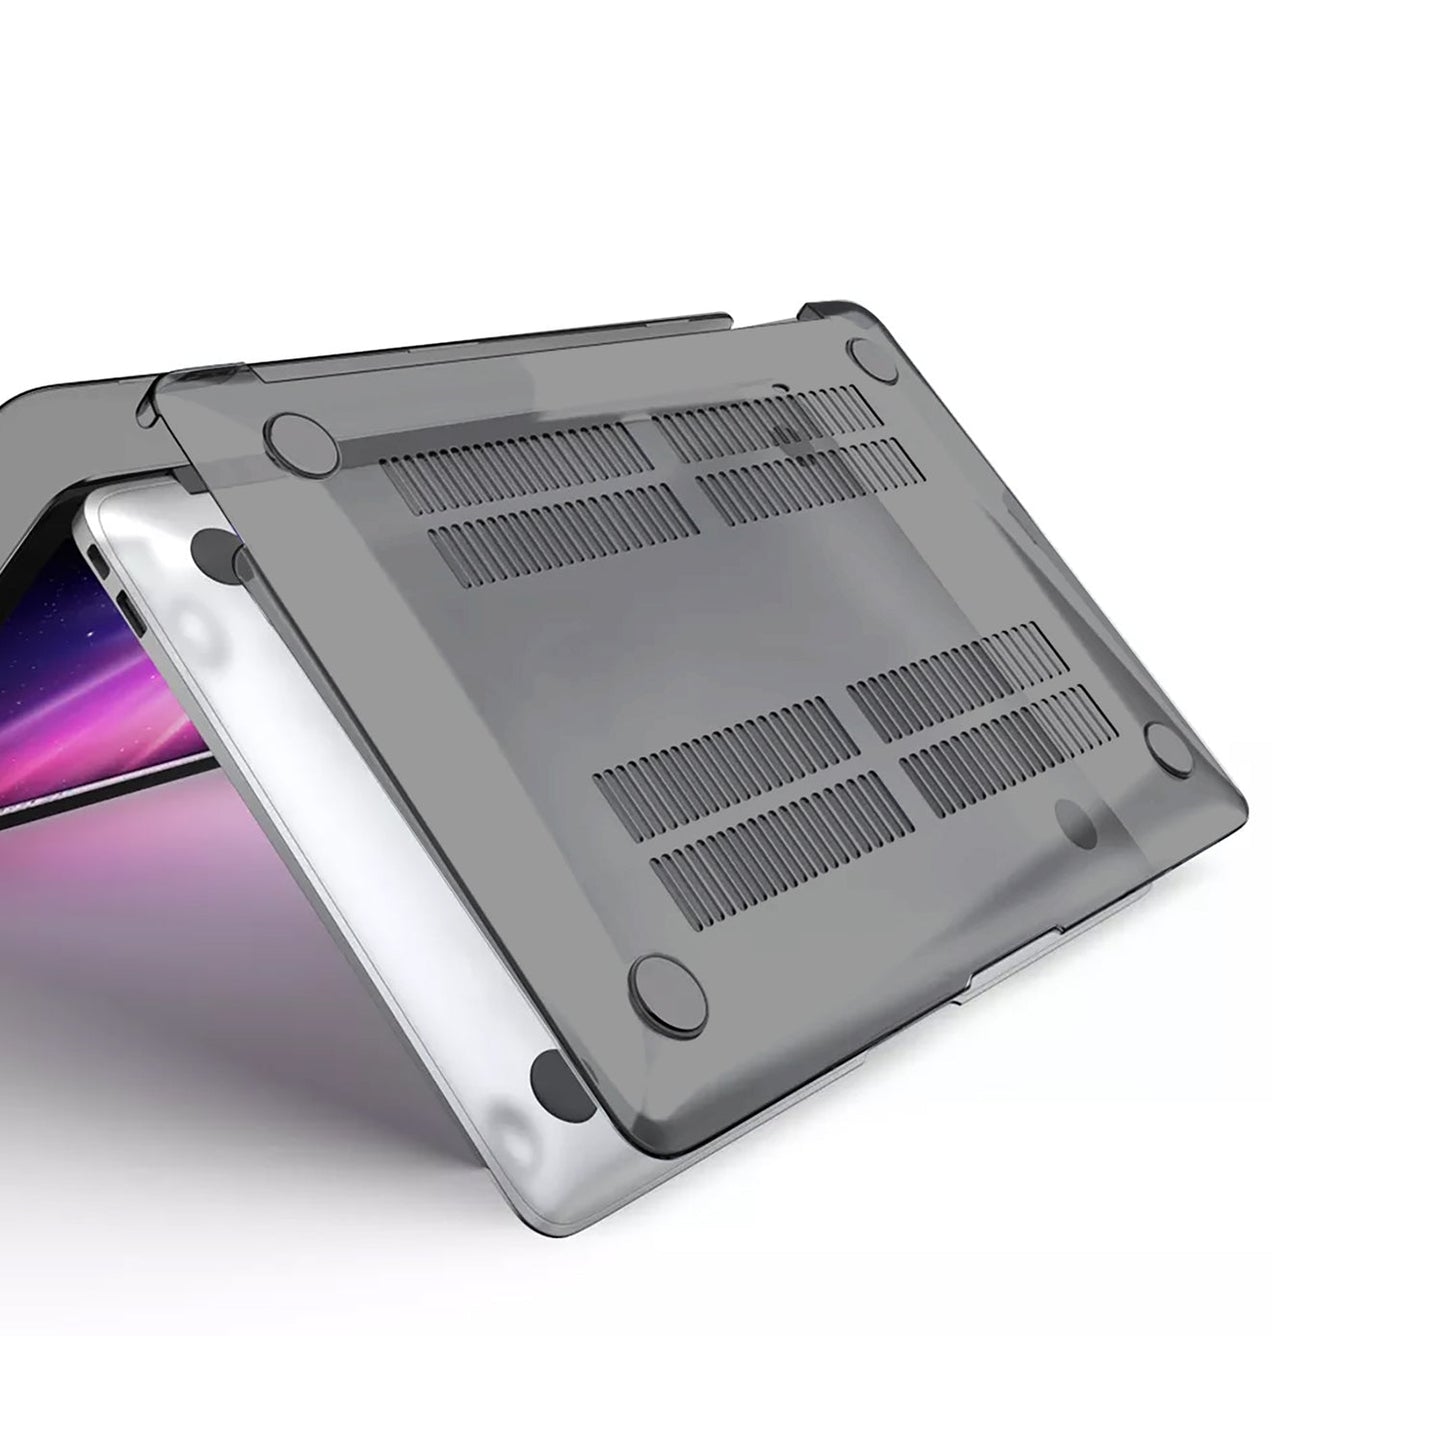 Gripp Compaq Macbook Air Hardshel Case 13" (M1 2020 & Retina 2020) - Smoke